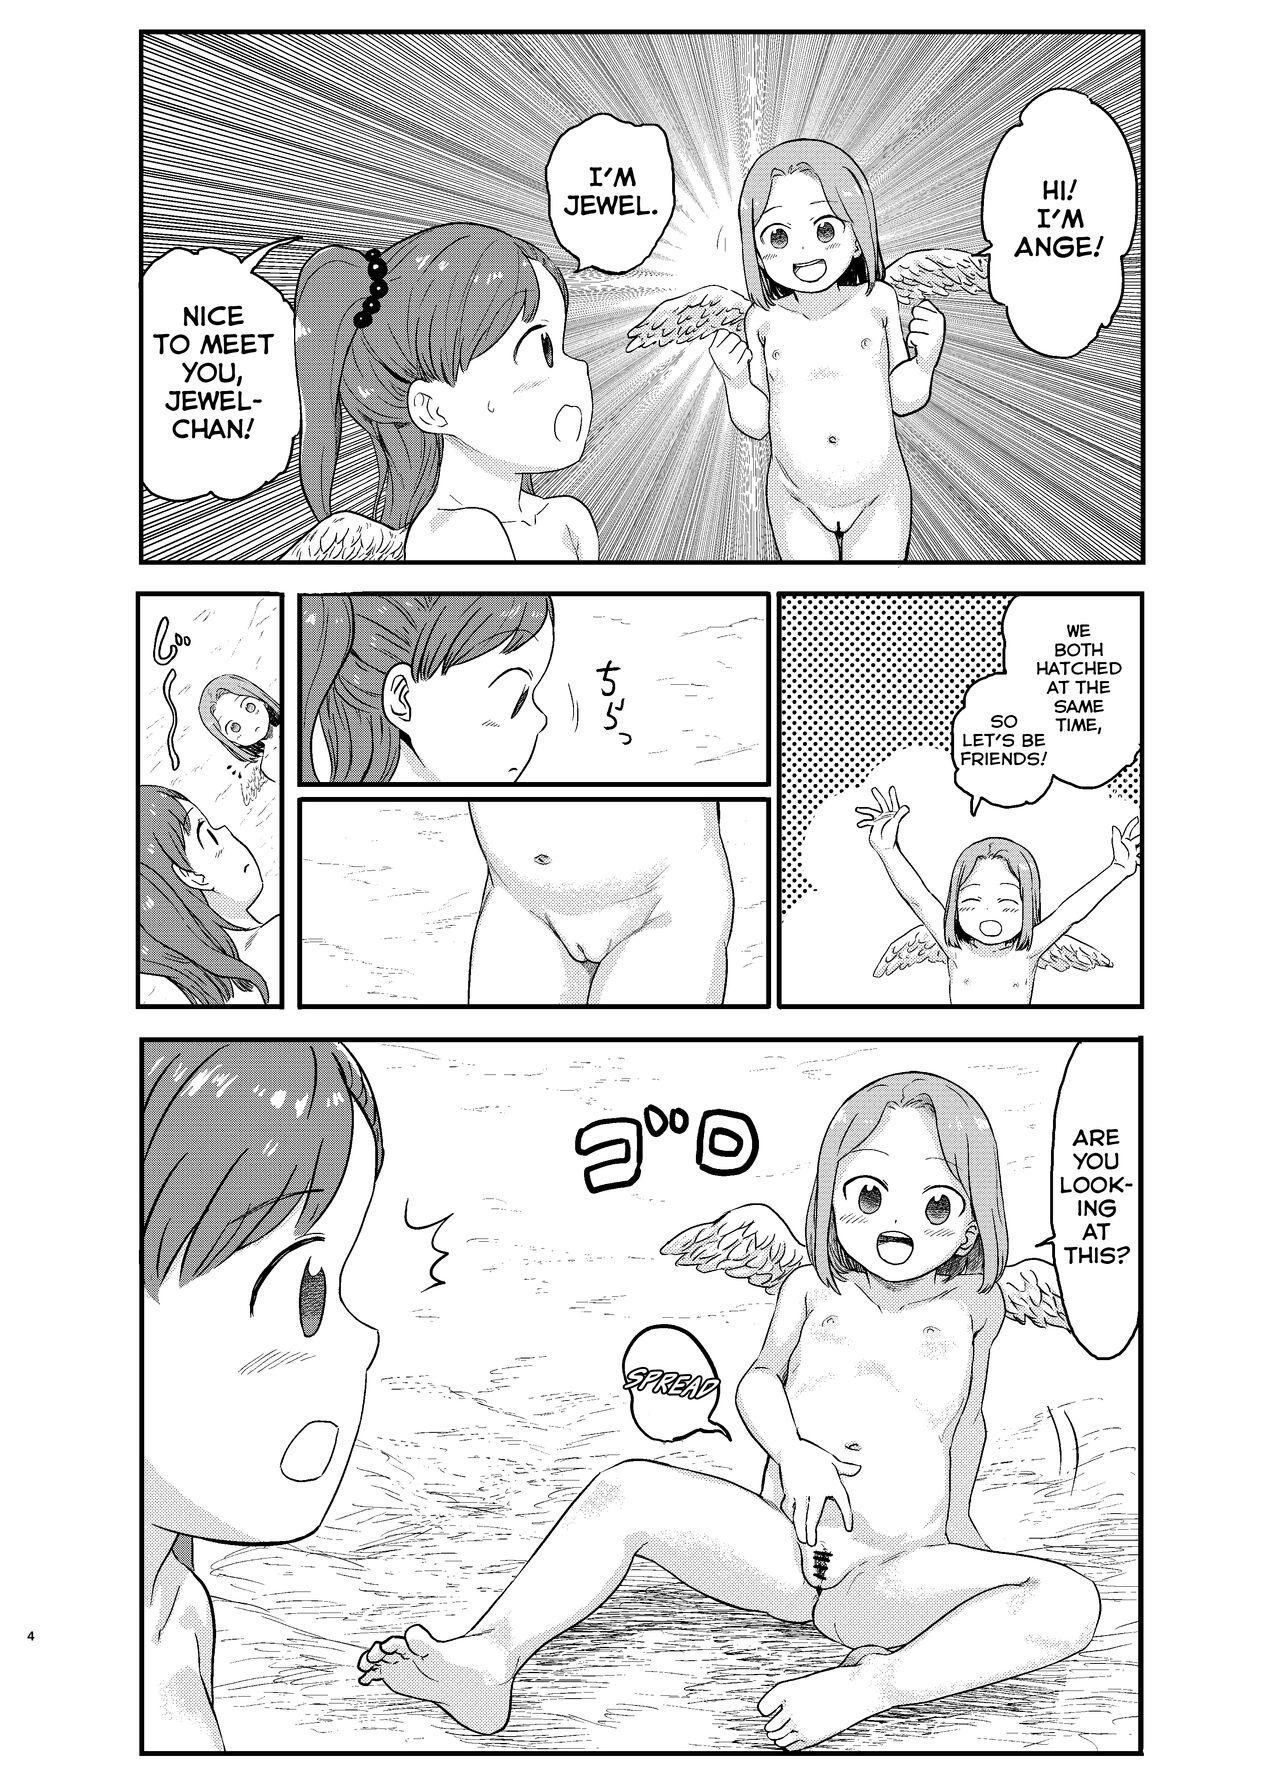 Yuri Tenshi no Futari ga Ecchi na Koto o Suru Manga | A Manga Where Two Lesbian Angels Do Lewd Things Together 3